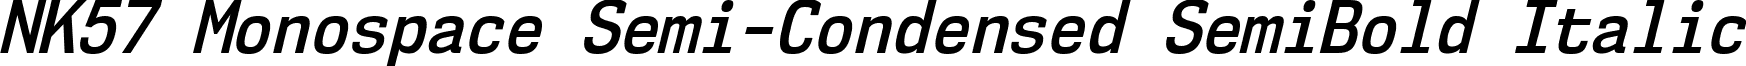 NK57 Monospace Semi-Condensed SemiBold Italic font - nk57-monospace.semi-condensed-semibold-italic.ttf